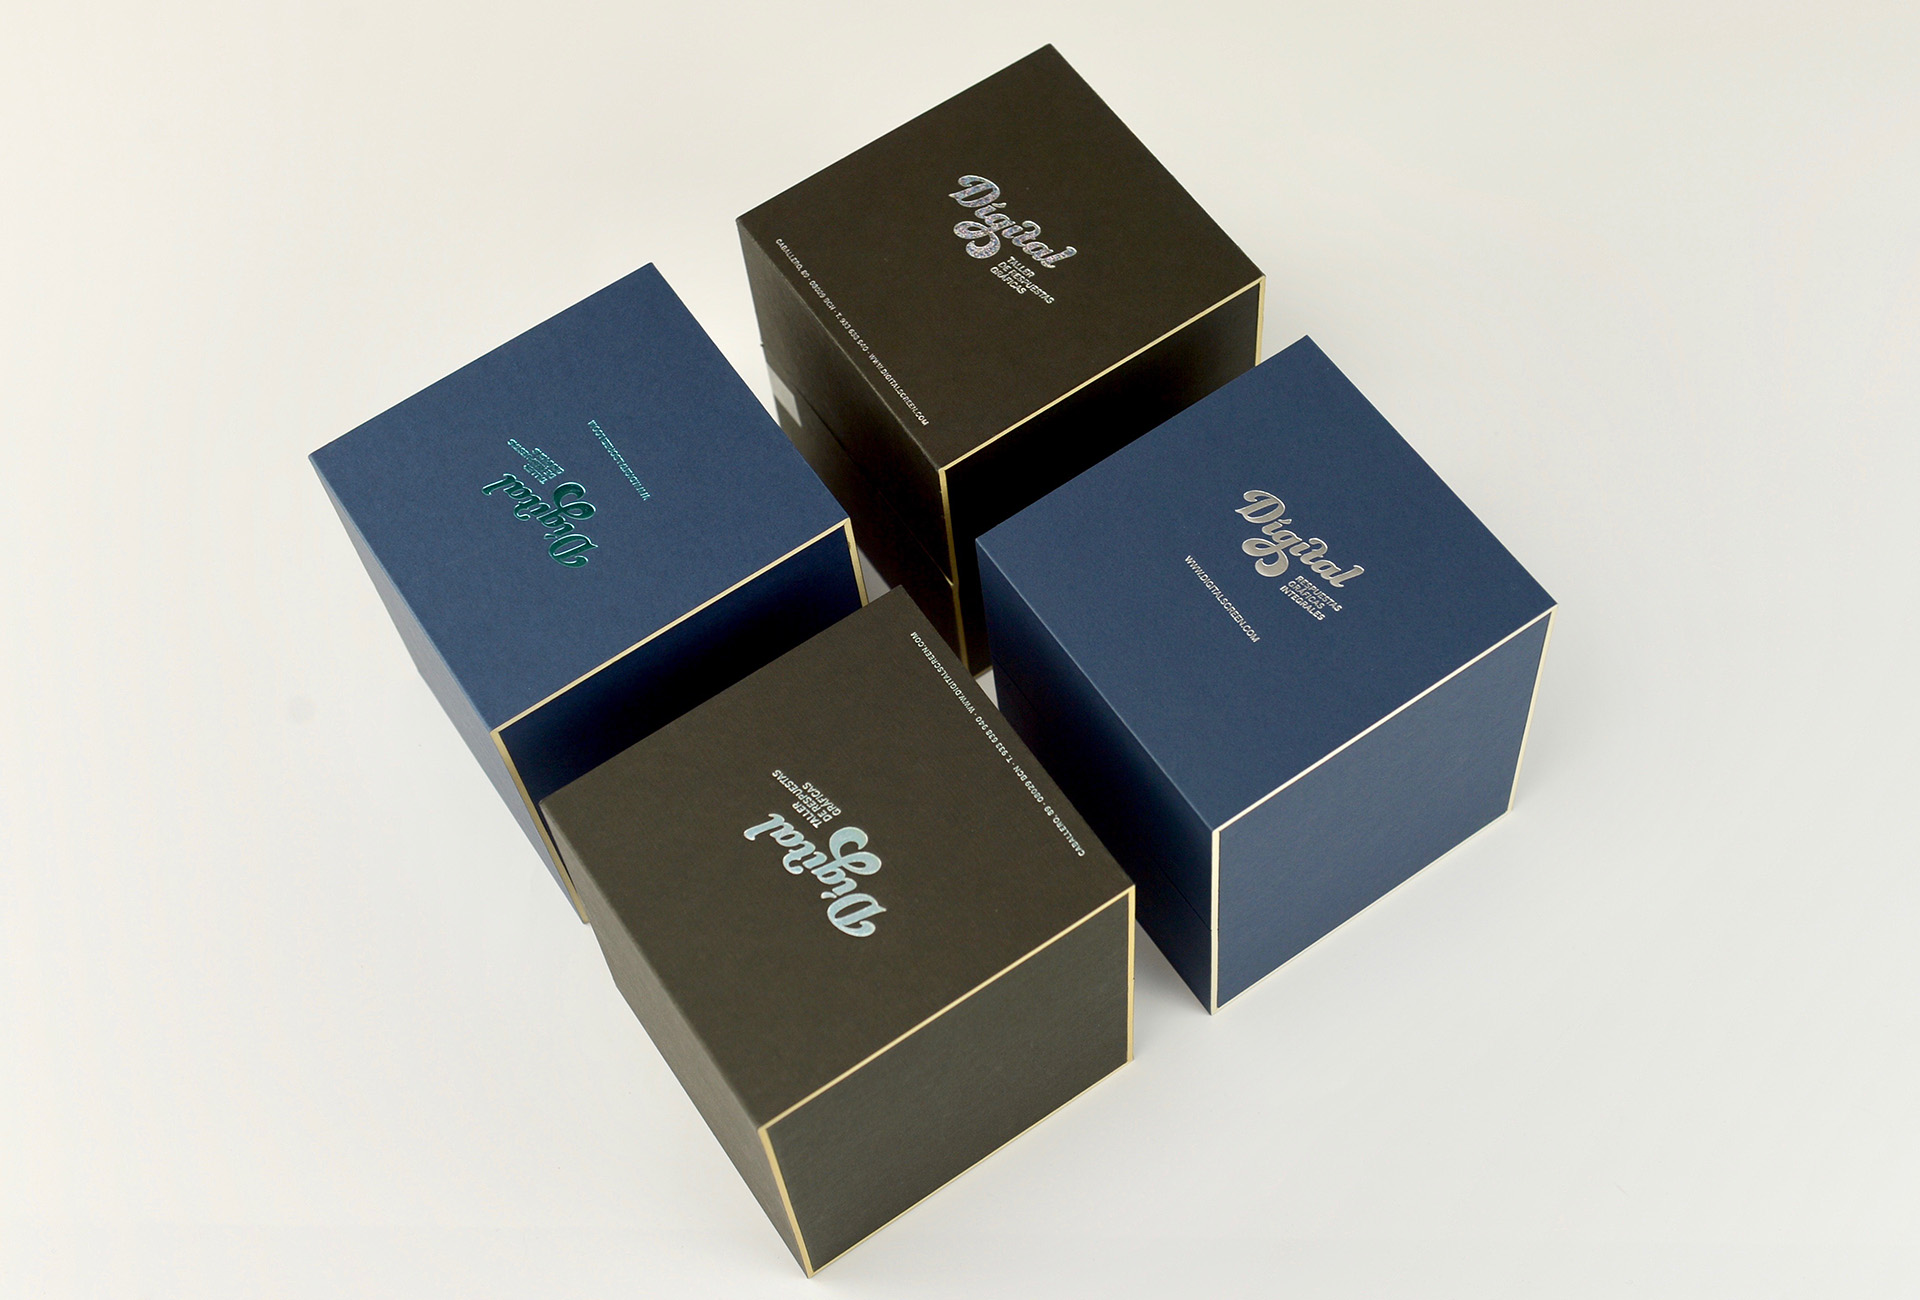 Materials showcase box for ‘Digital’ company | 200BIS BARCELONA